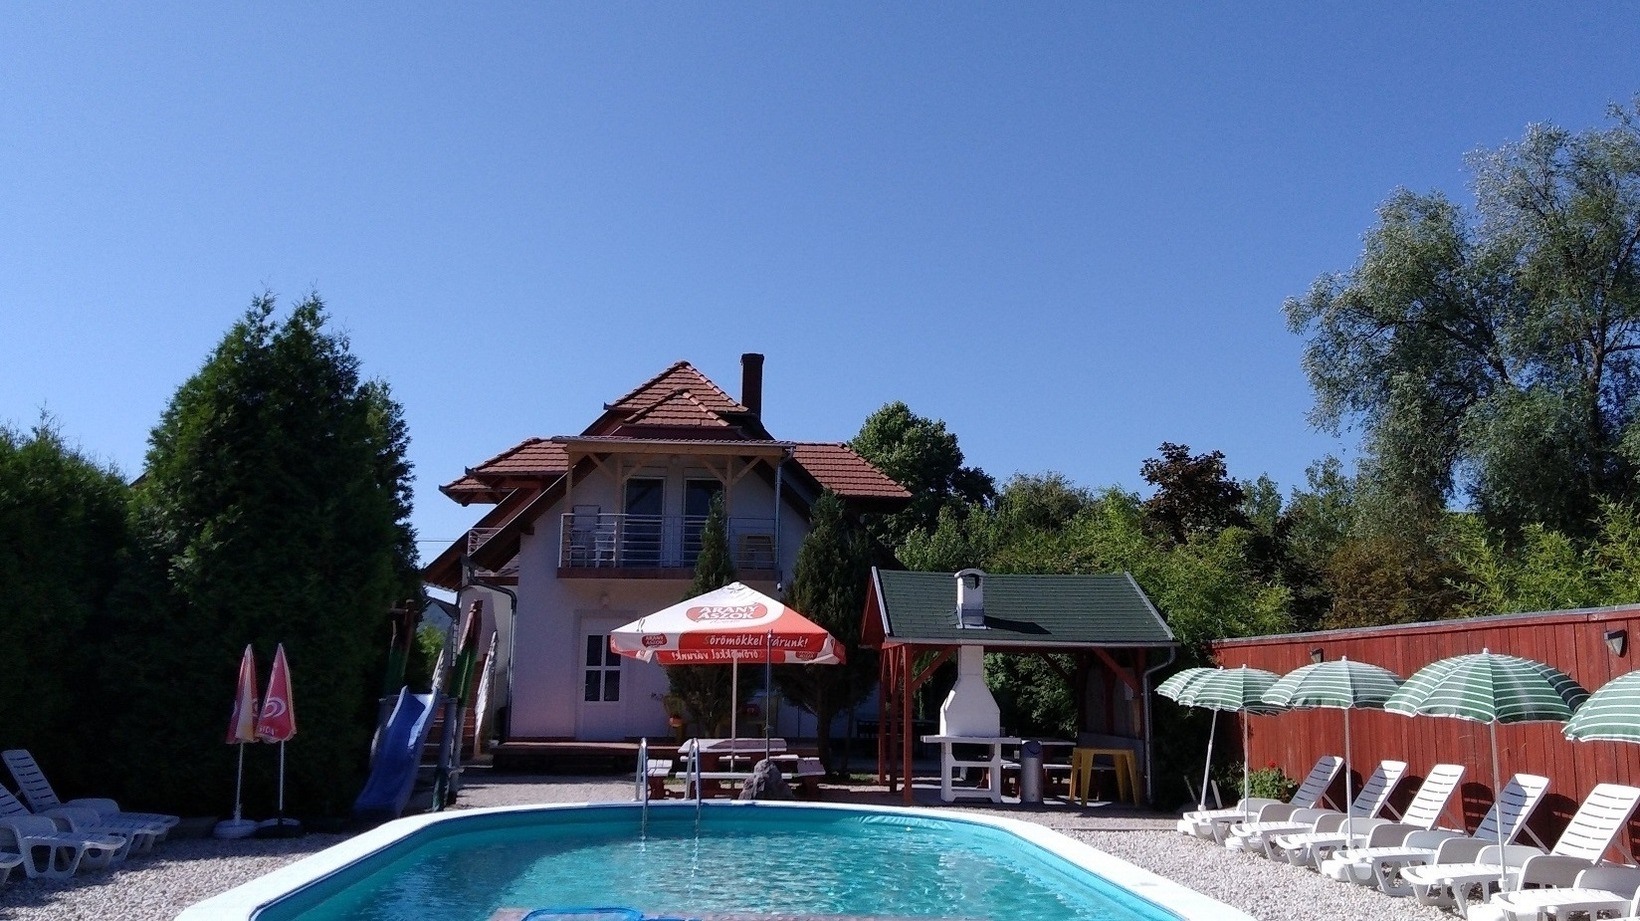 Ferienhaus direkt am See mit Pool, WLAN, Spielplat Ferienhaus am Balaton Plattensee